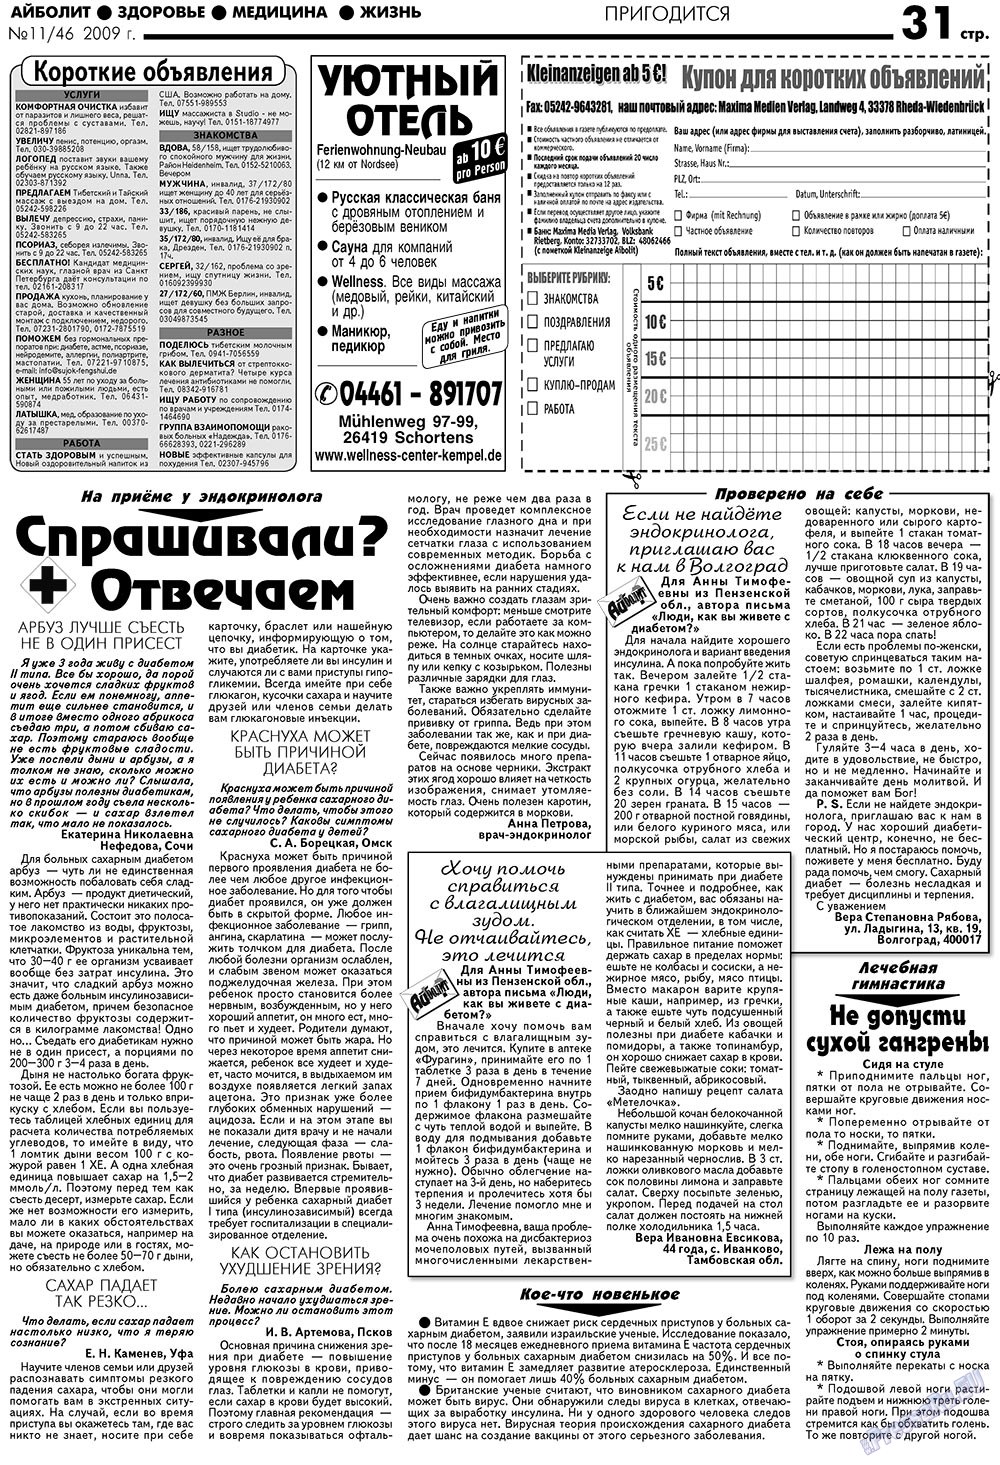 АйБолит (газета). 2009 год, номер 11, стр. 31